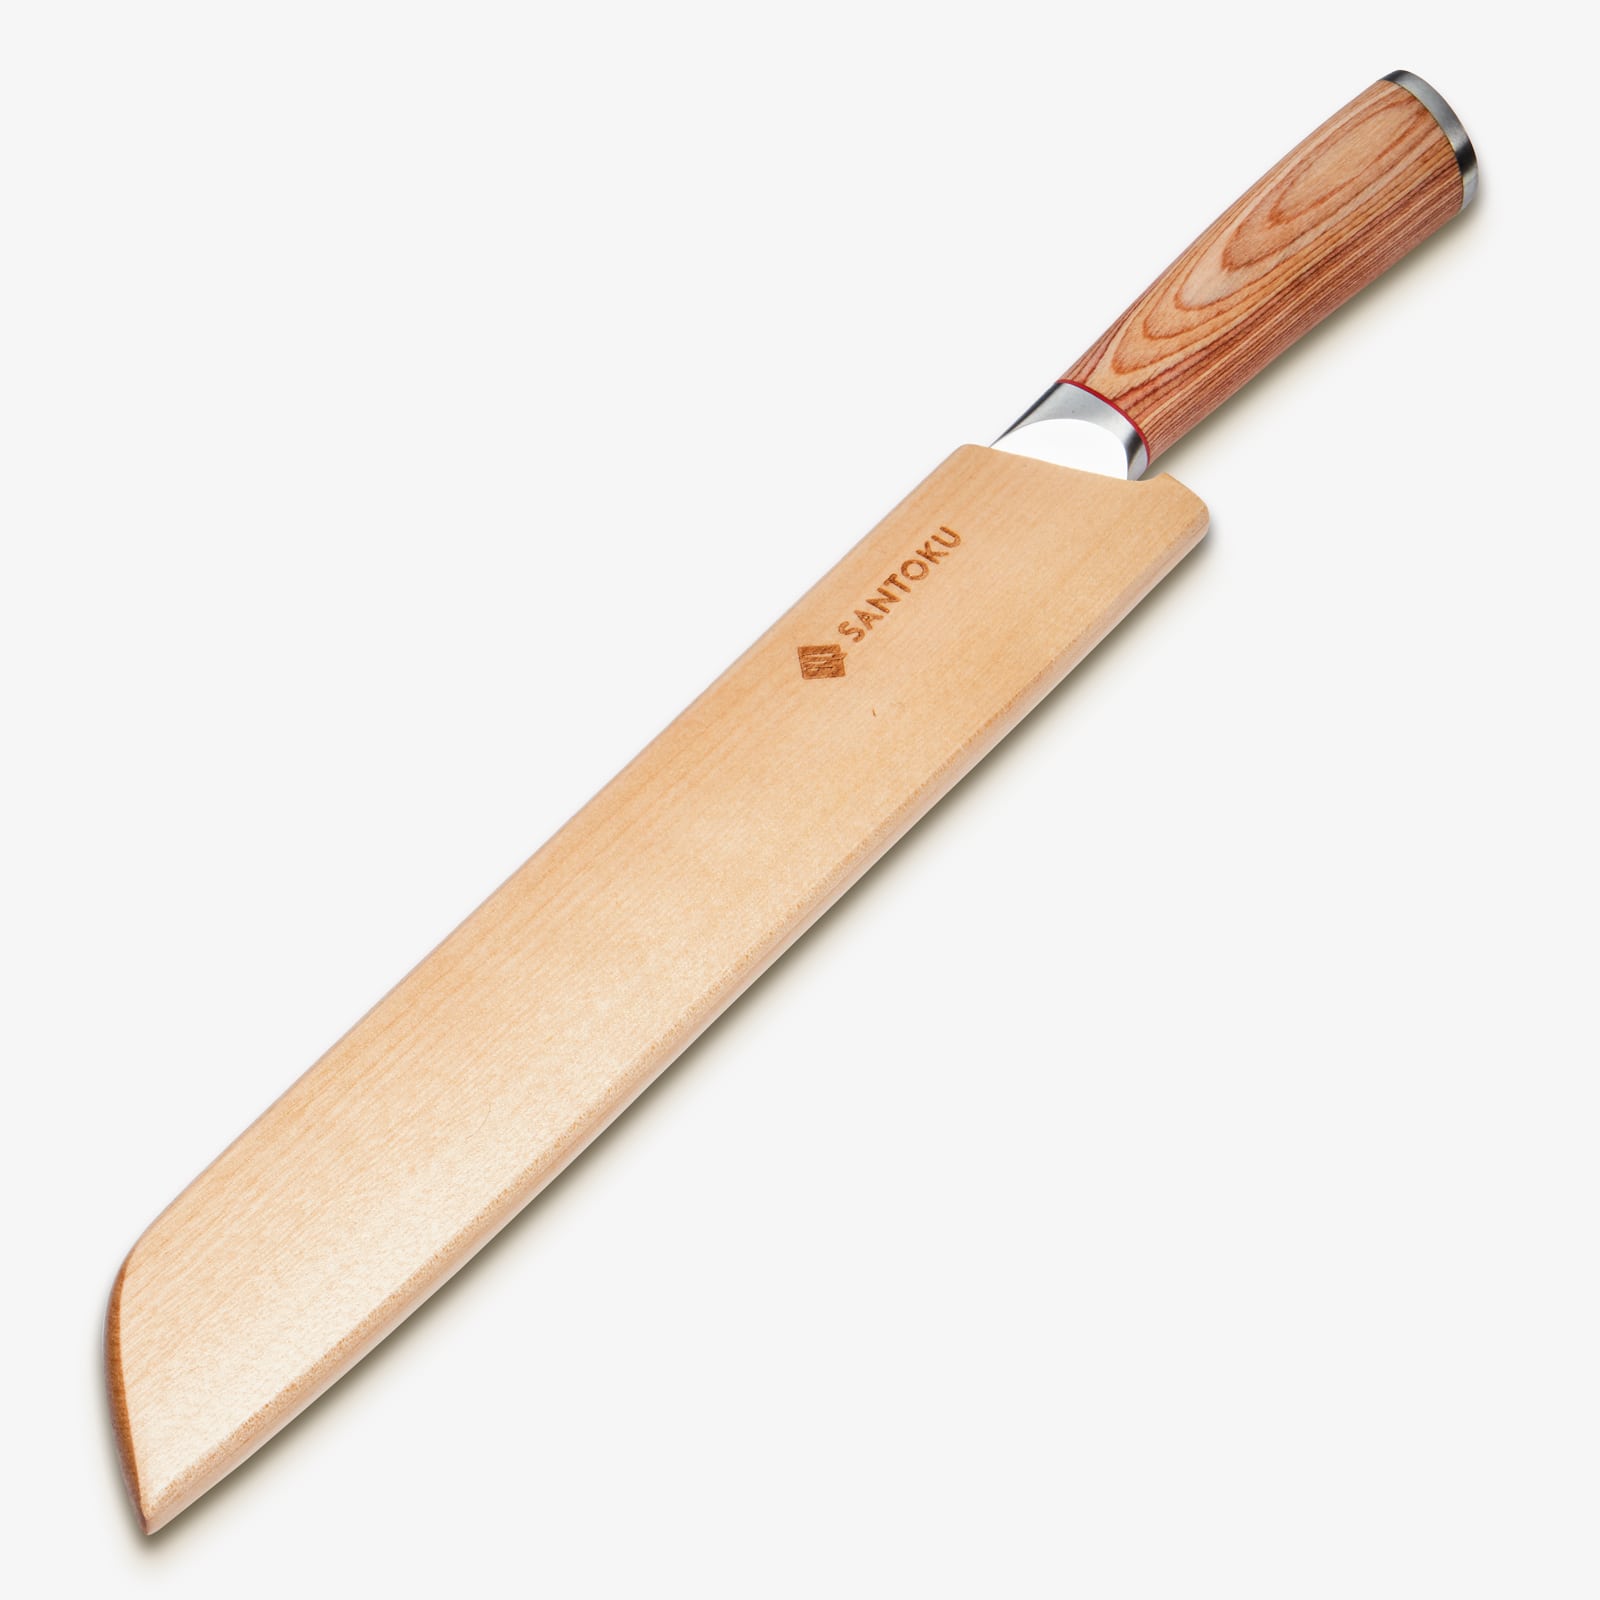 Haruta (はる た) cuțit de pâine de 10 inch